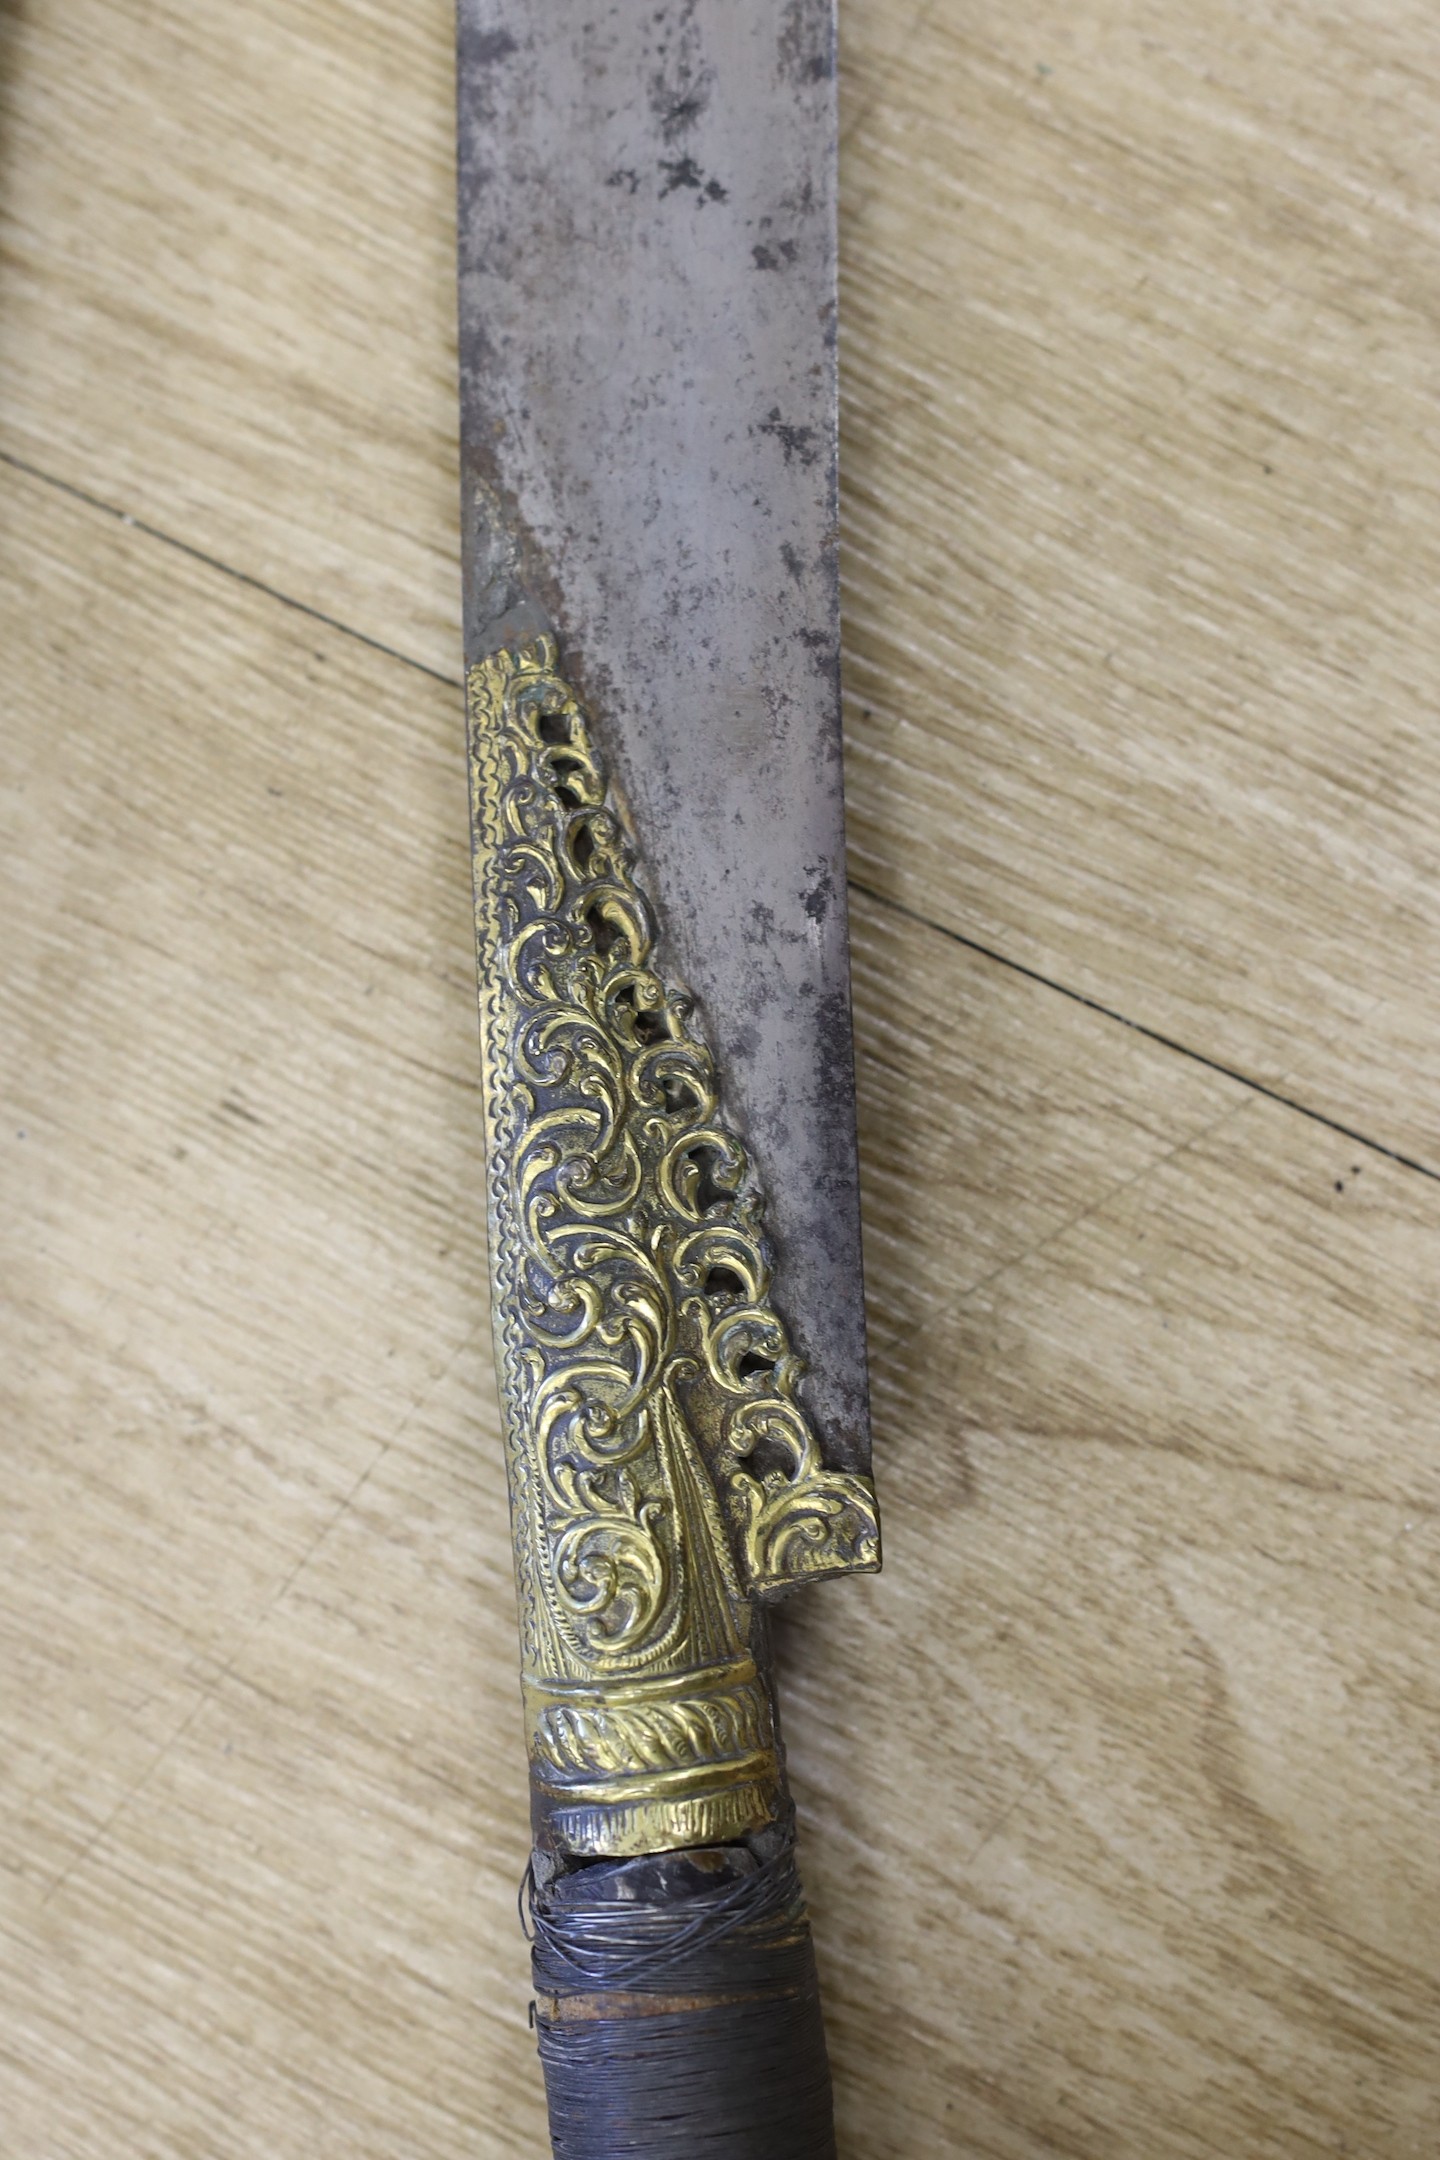 A 19th century Ottoman Short sword (yatagan) - 86cm long